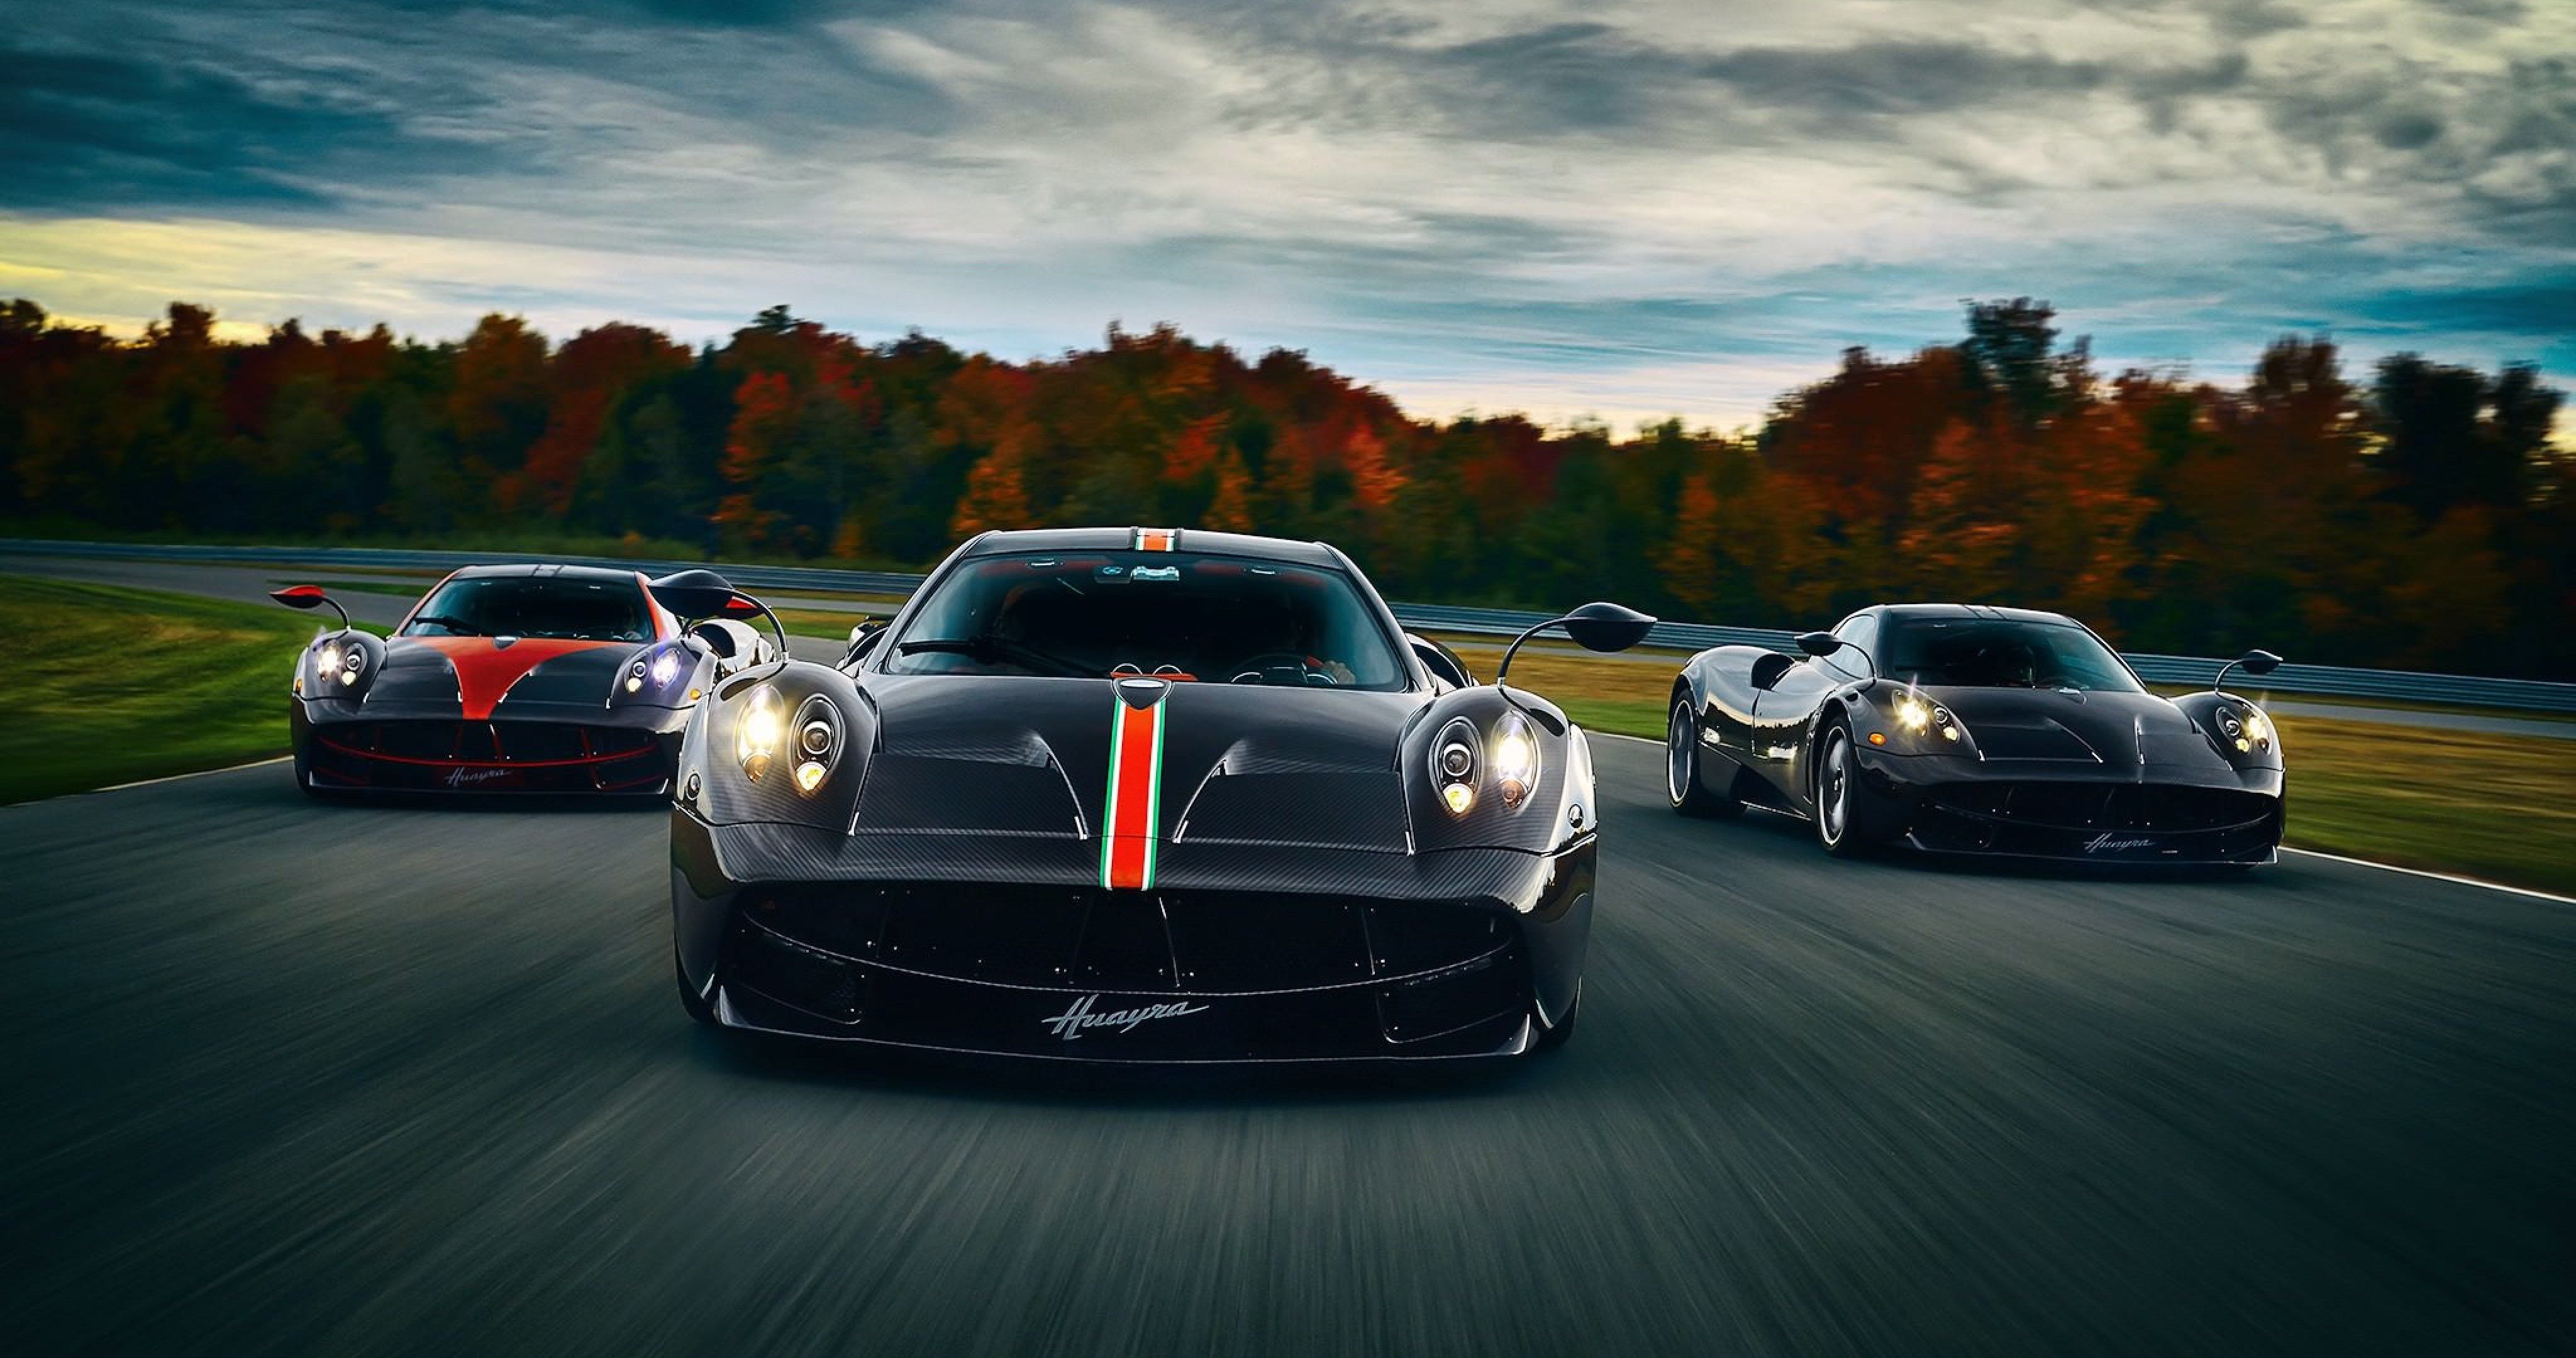 Top 999+ Cool Cars Lamborghini Wallpaper Full HD, 4K✓Free to Use